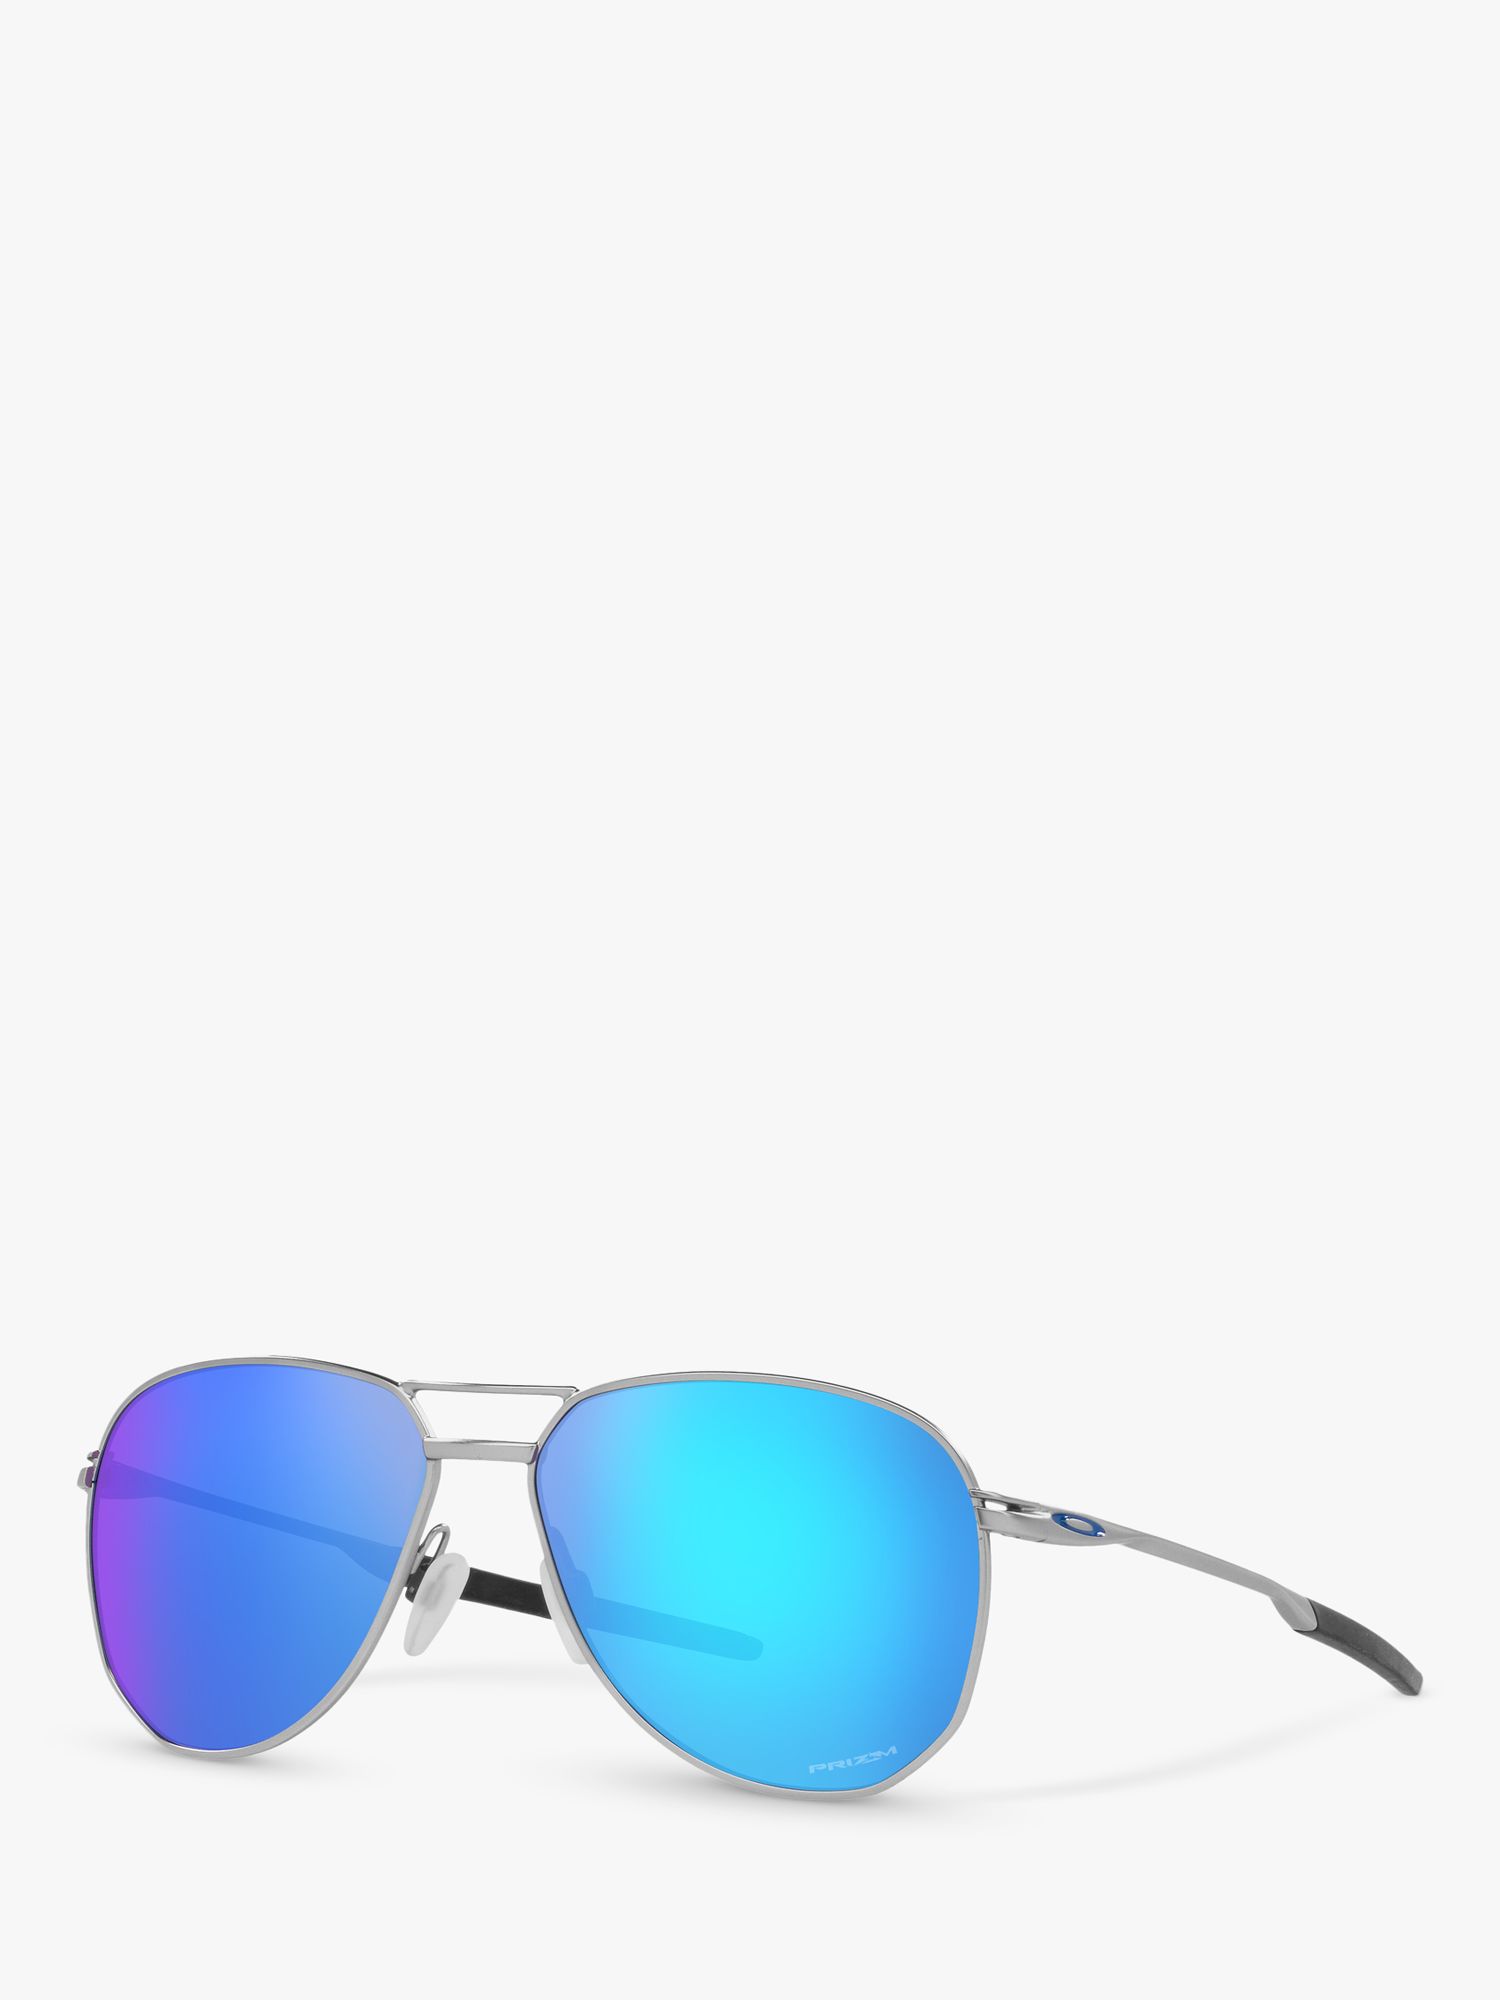 Men's Sunglasses - Oakley, Aviator | John Lewis & Partners